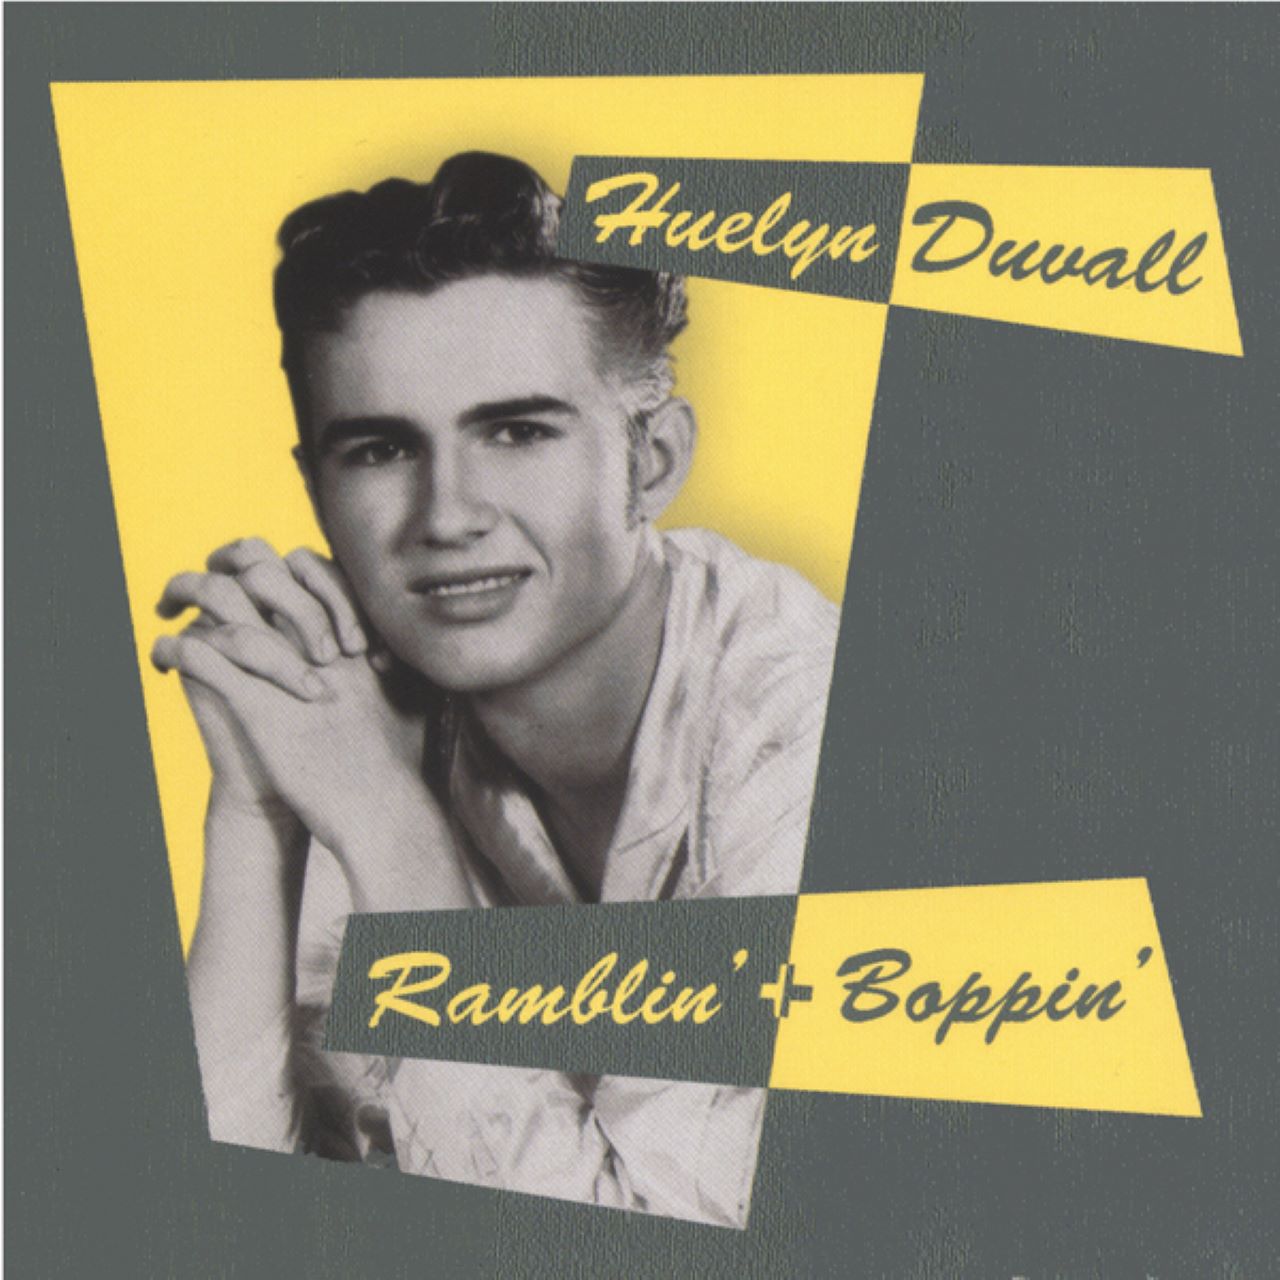 Huelyn Duvall - Ramblin' + Boppin' cover album